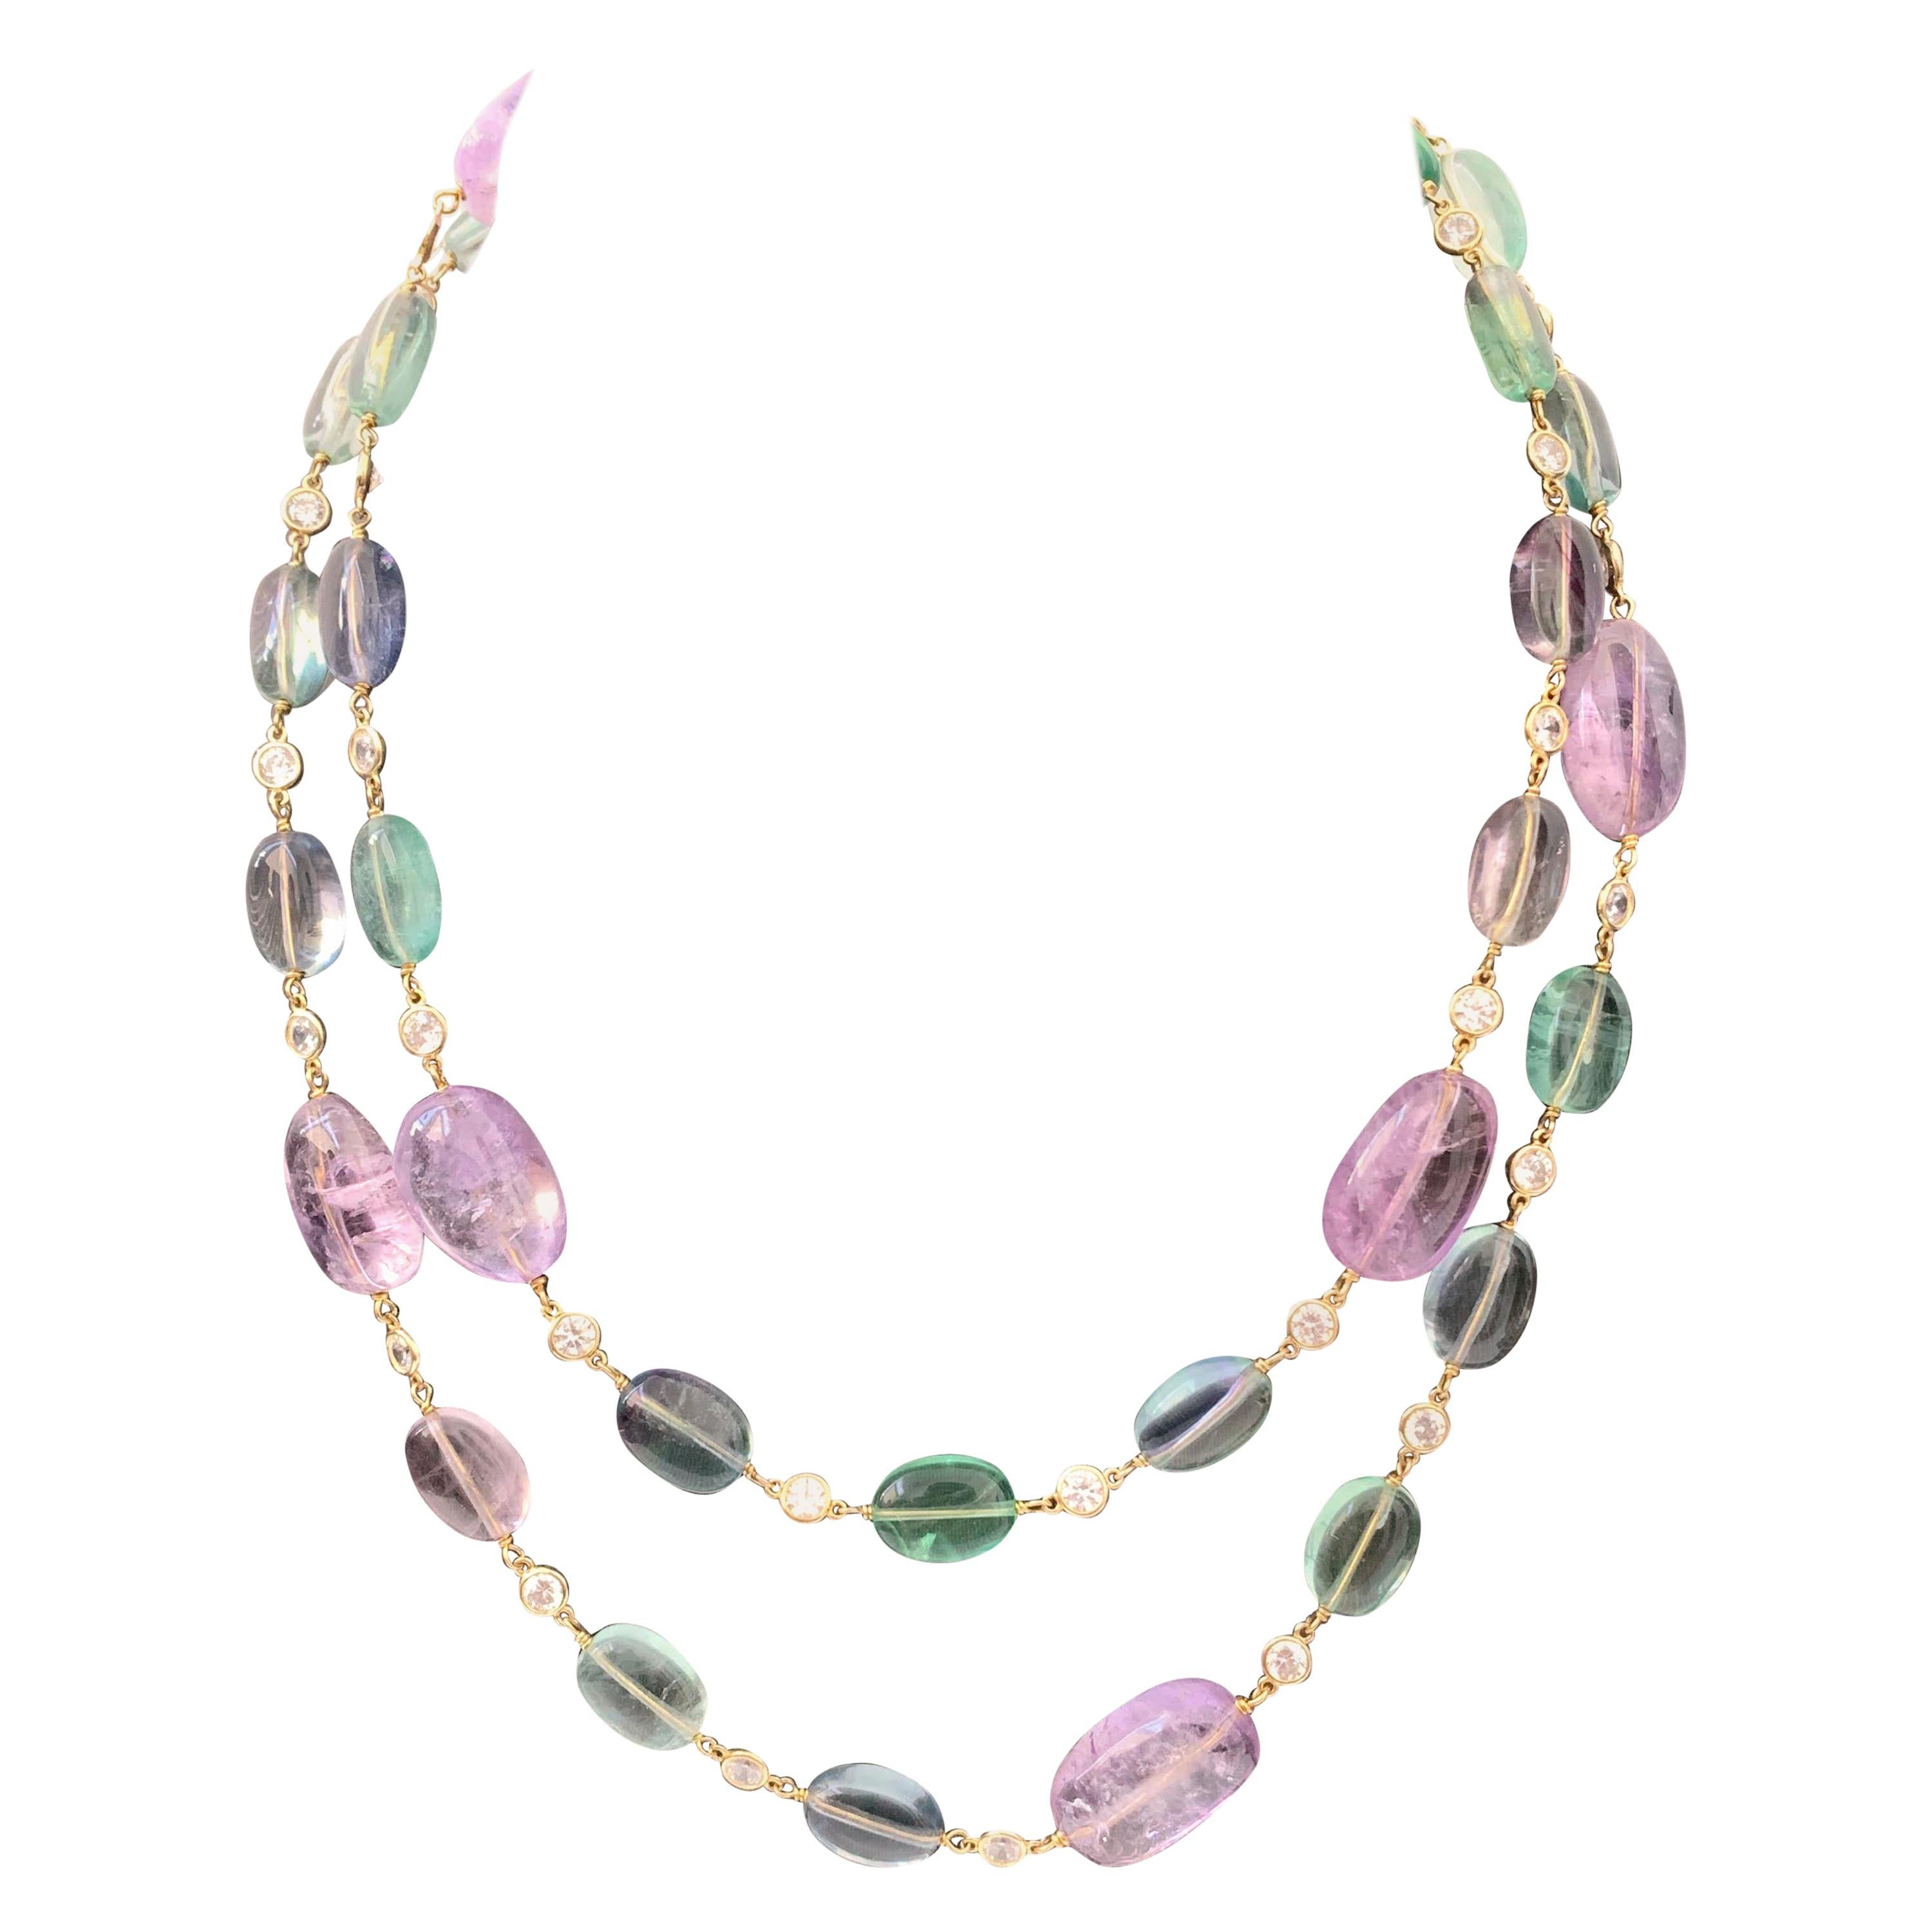 Gemstone Necklace Fluorite Beads Necklace & Aquamarine Beads Stone Necklace Beaded Necklace Multi Stone Beads Necklace Woman Jewelry.